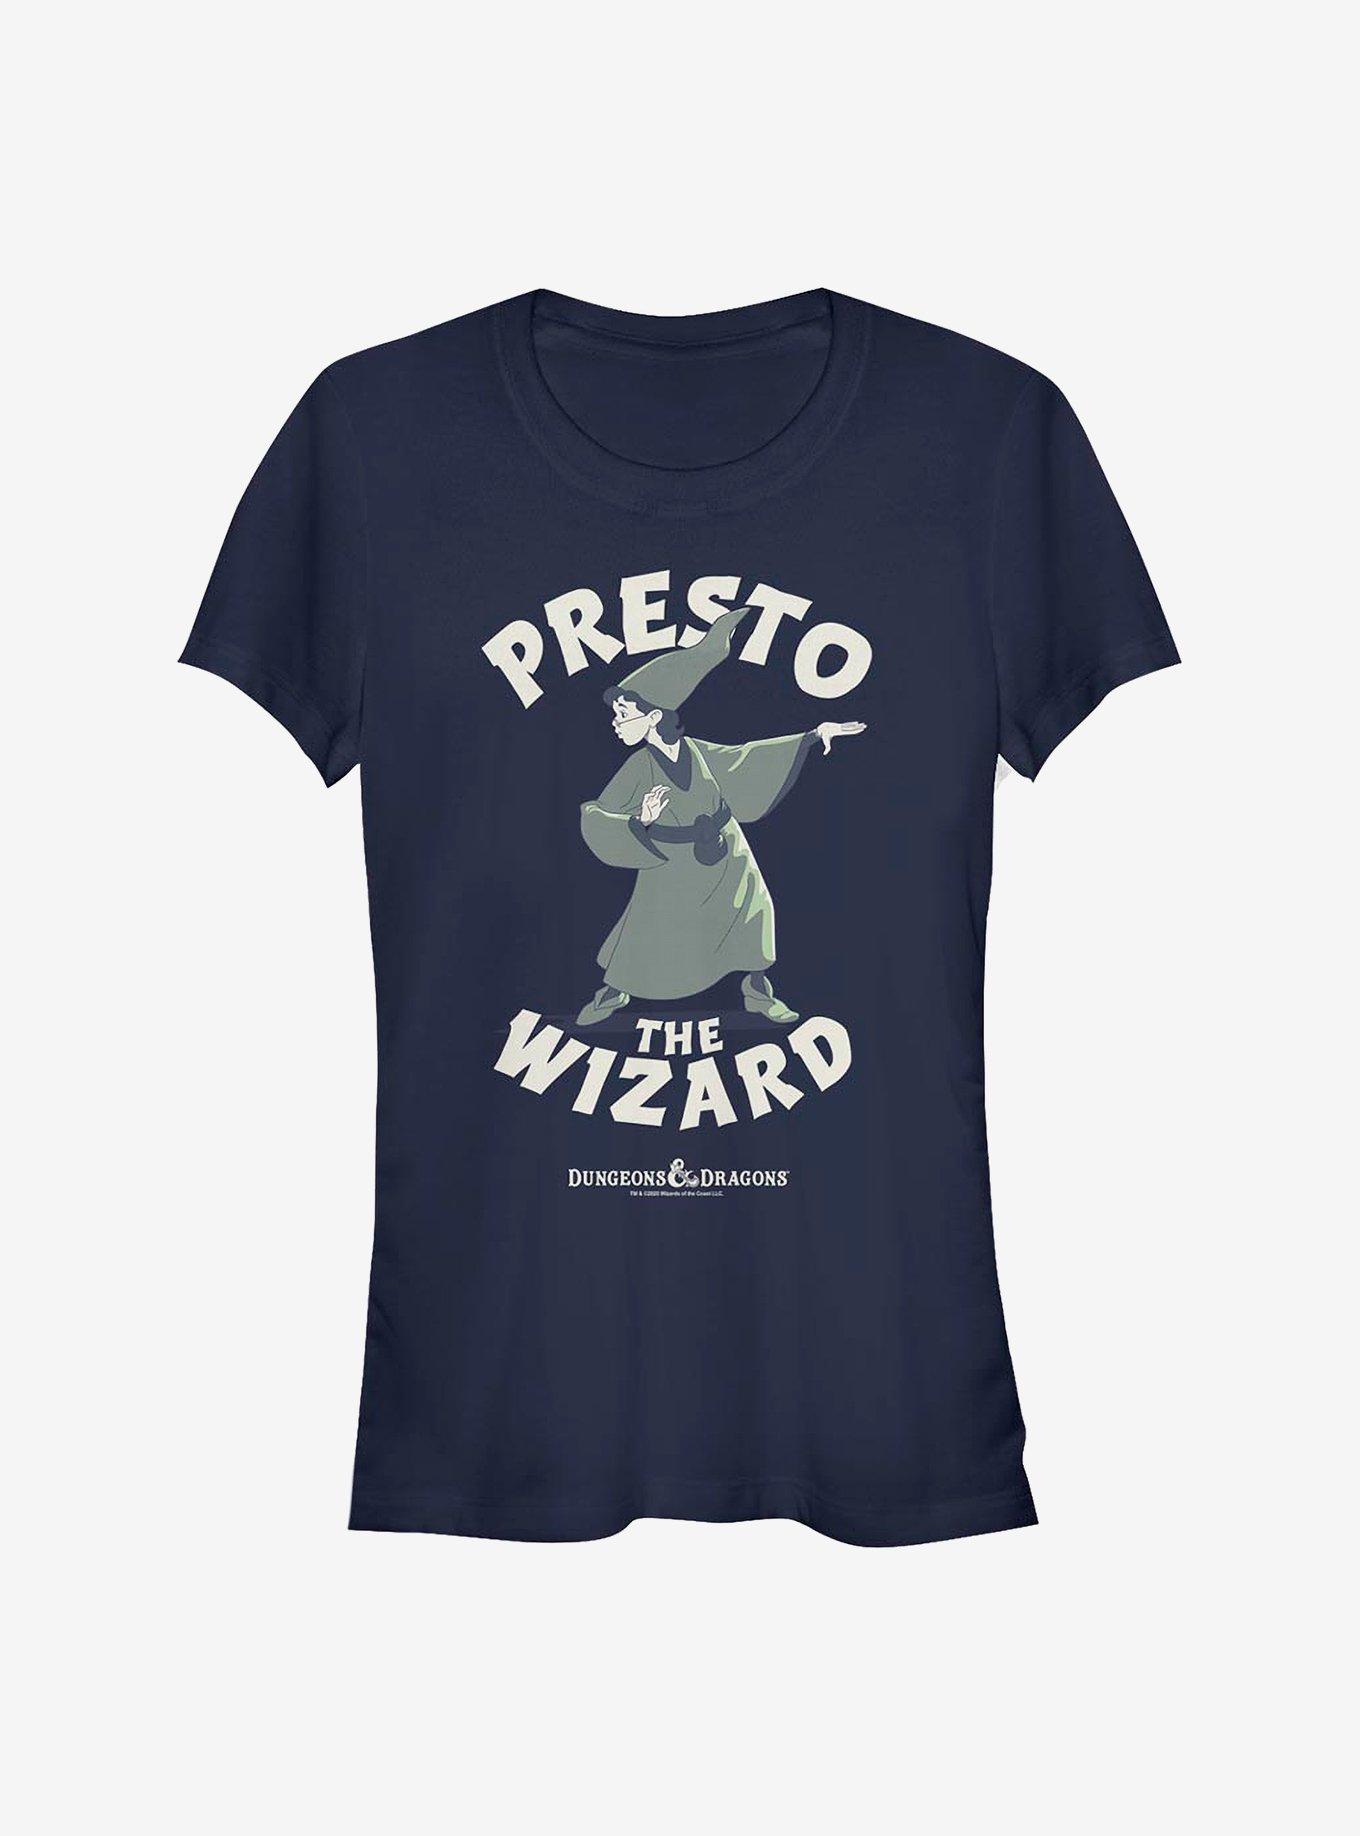 Dungeons & Dragons Presto Wizard Girls T-Shirt, NAVY, hi-res